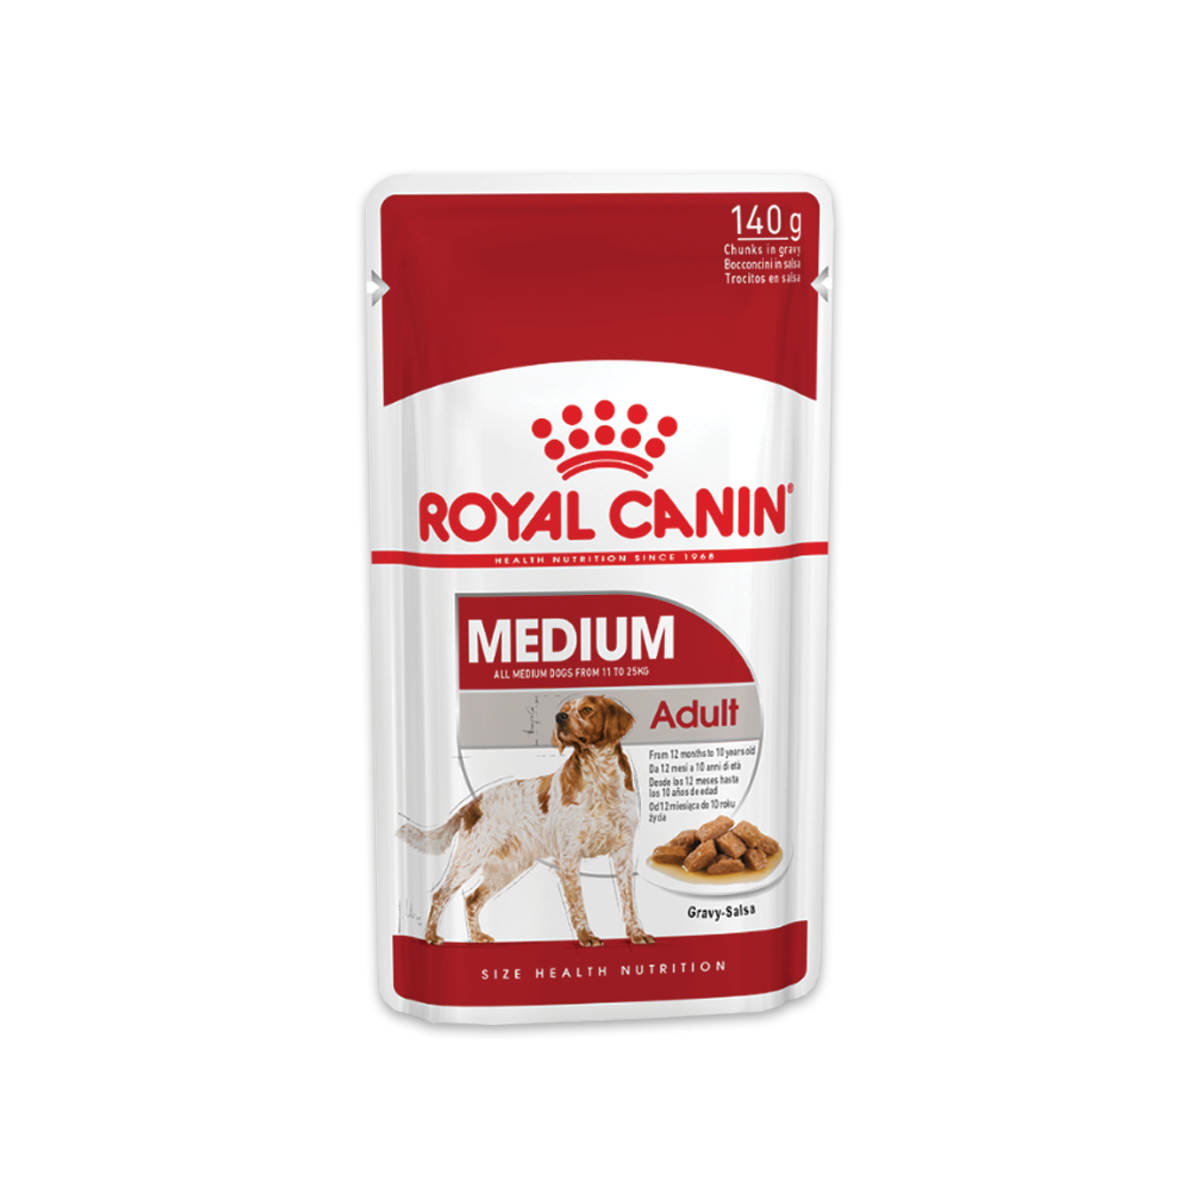 Royal Canin Pouch SHW Medium Adult โรยัล คานิน อาหารชนิดเปียกสำหรับสุนัขพันธุ์กลาง อายุ 12 เดือน – 10 ปี